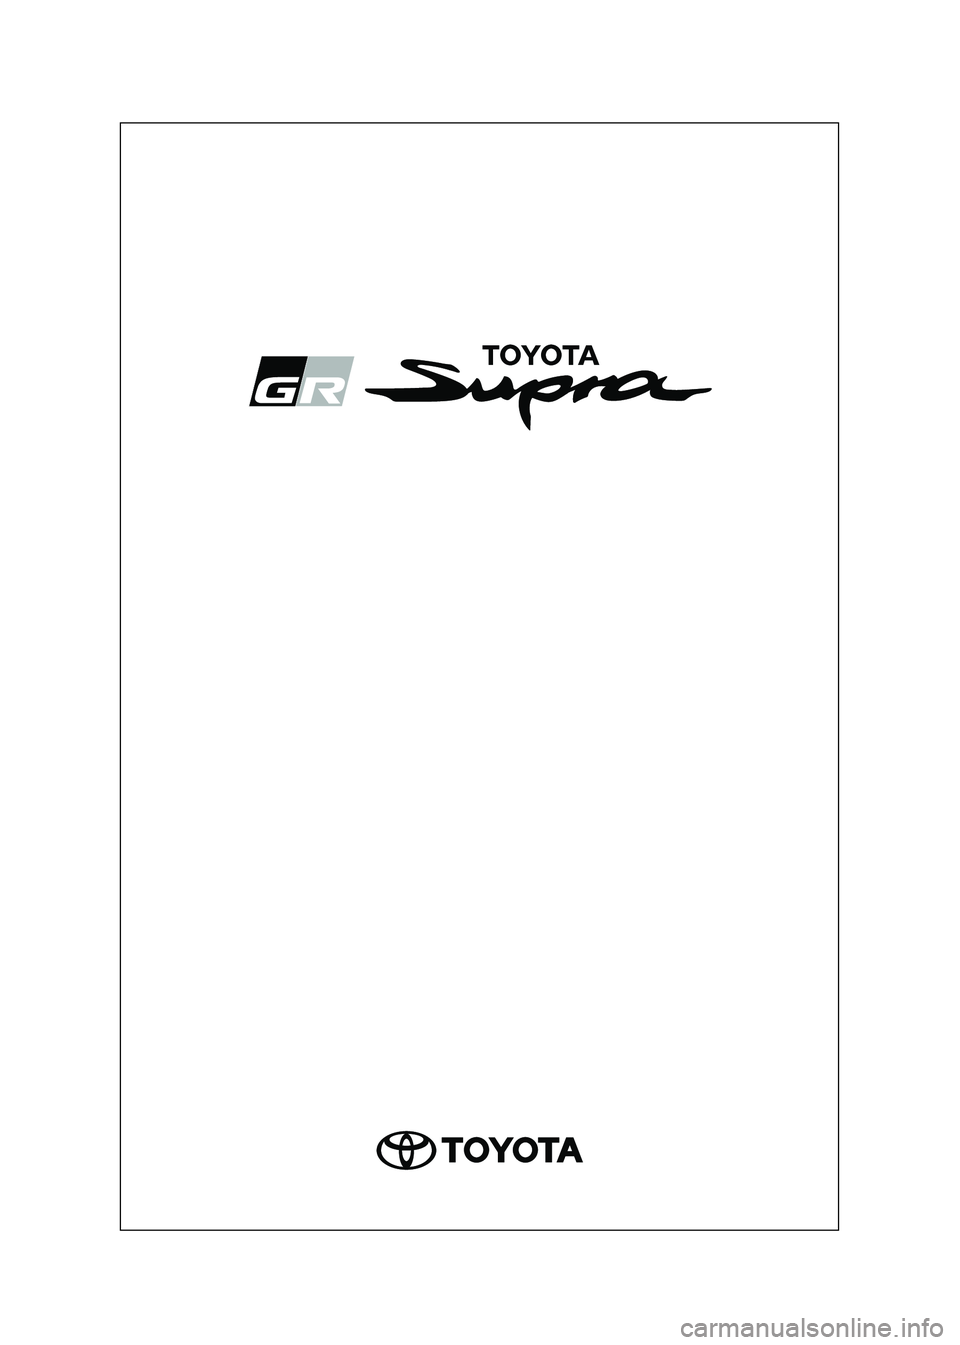 TOYOTA SUPRA 2021  Manuale de Empleo (in Spanish) Supra Owner’s Manual_ES
Supra_OM_Spanish_OM99X80S.book  1 ページ  ２０２０年８月２６日　水曜日　午後１時３１分 